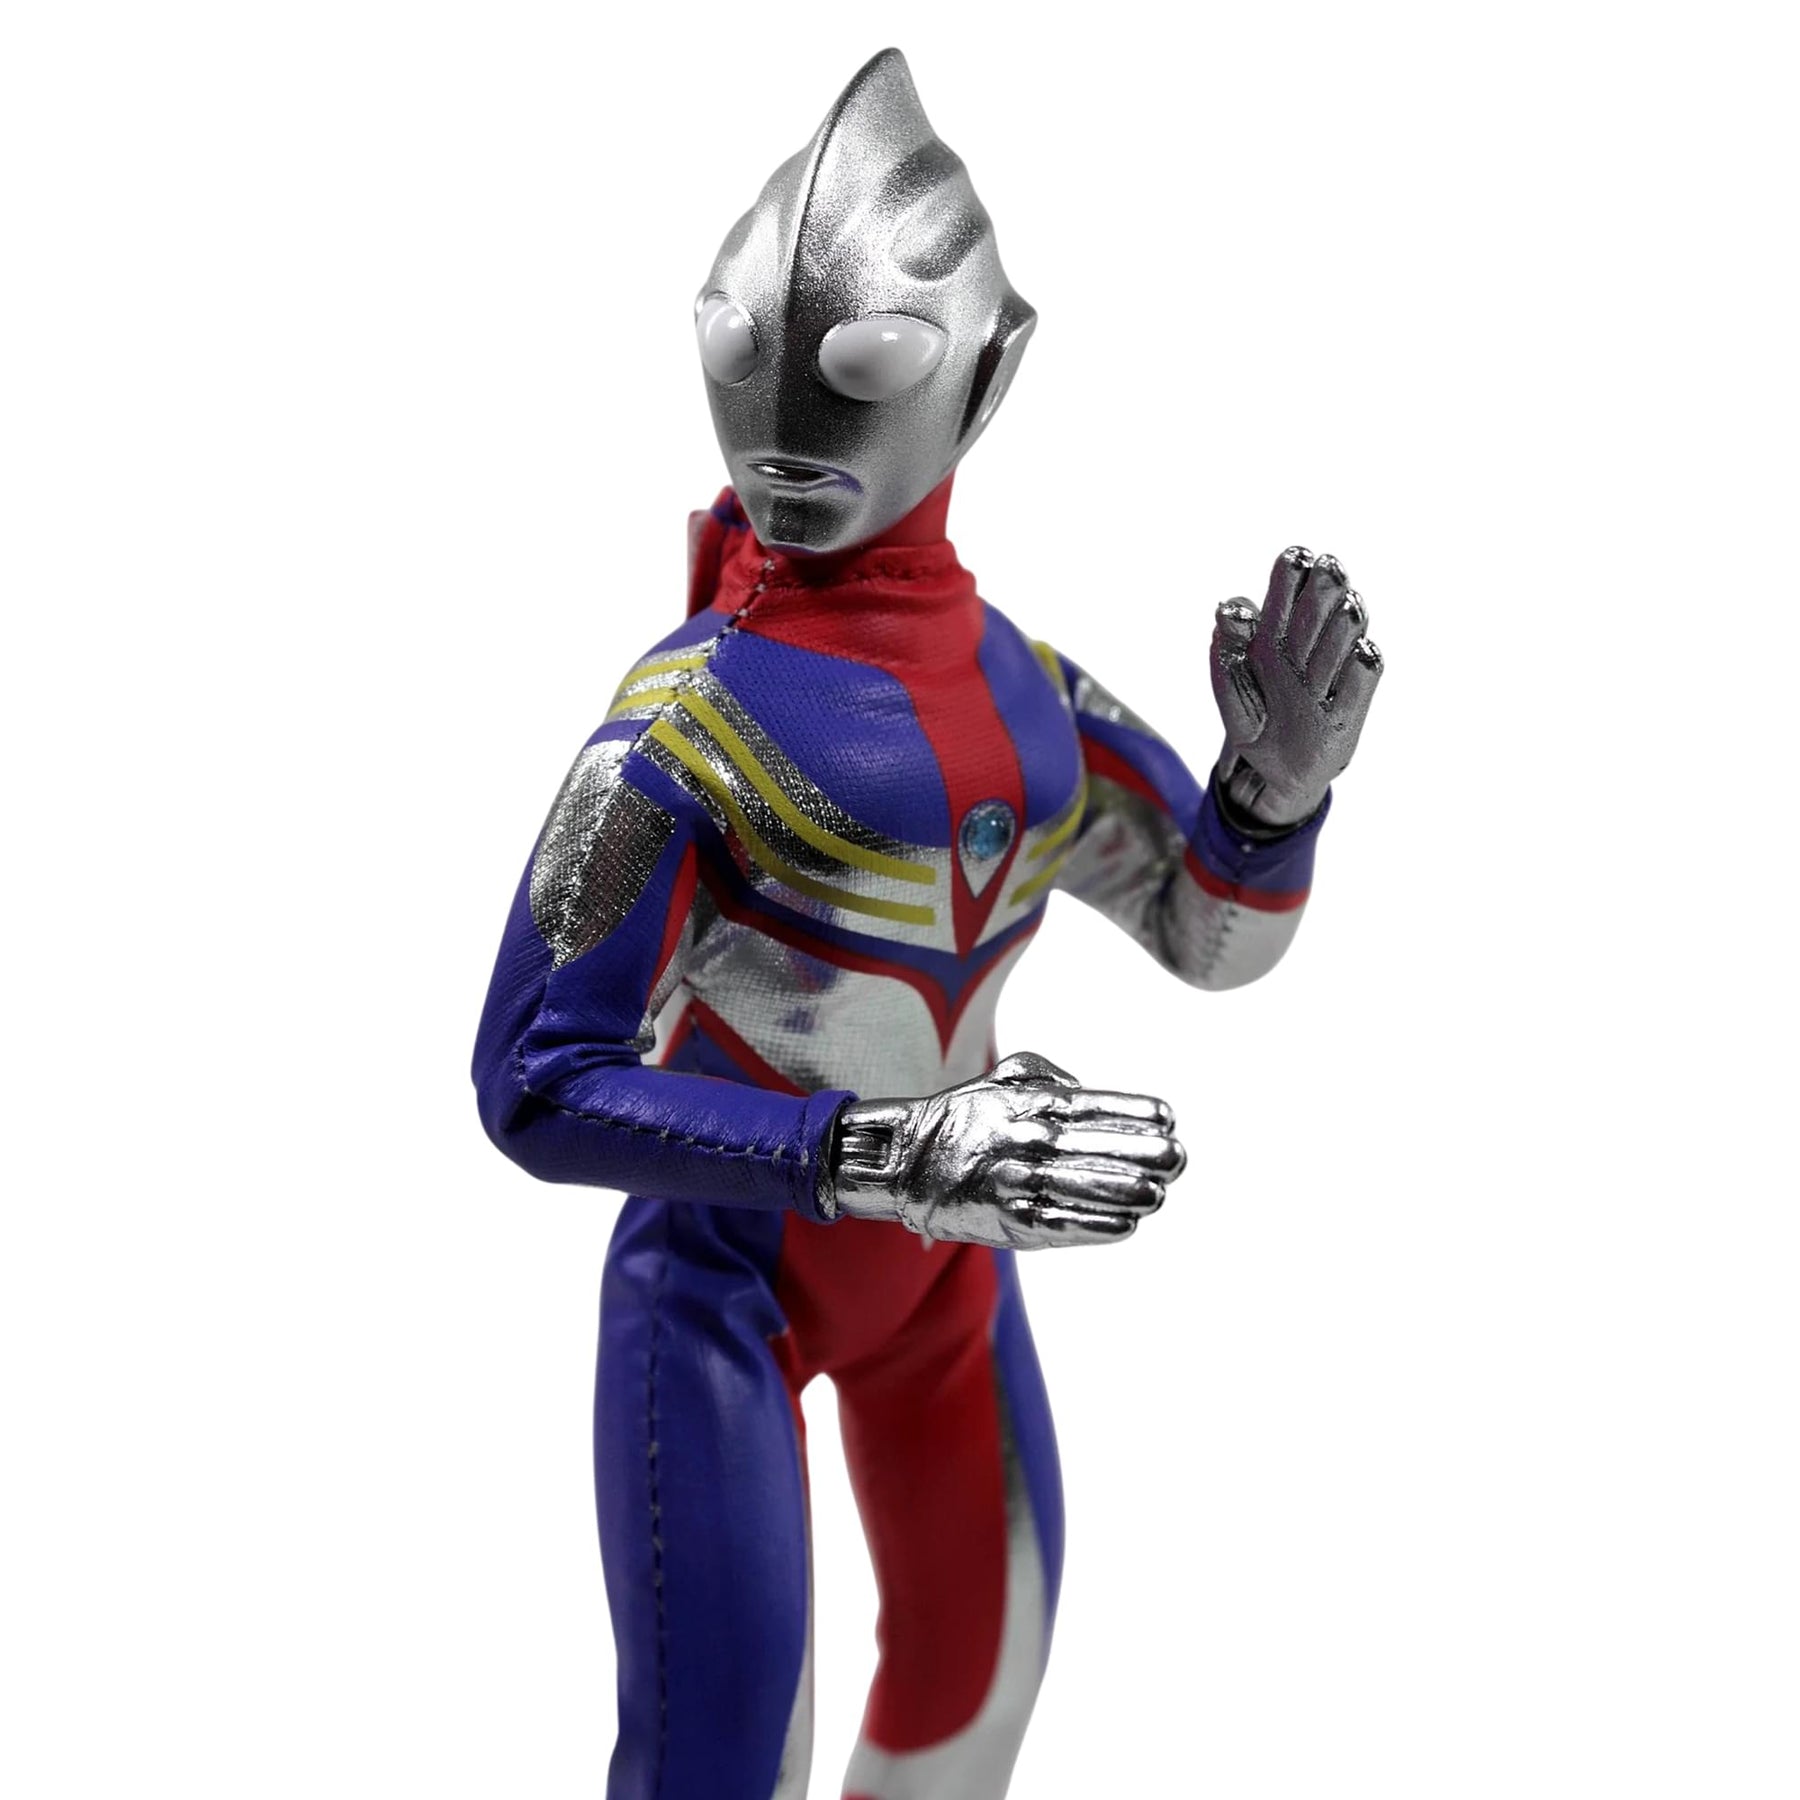 Mego Ultraman Tiga 8 Inch Action Figure